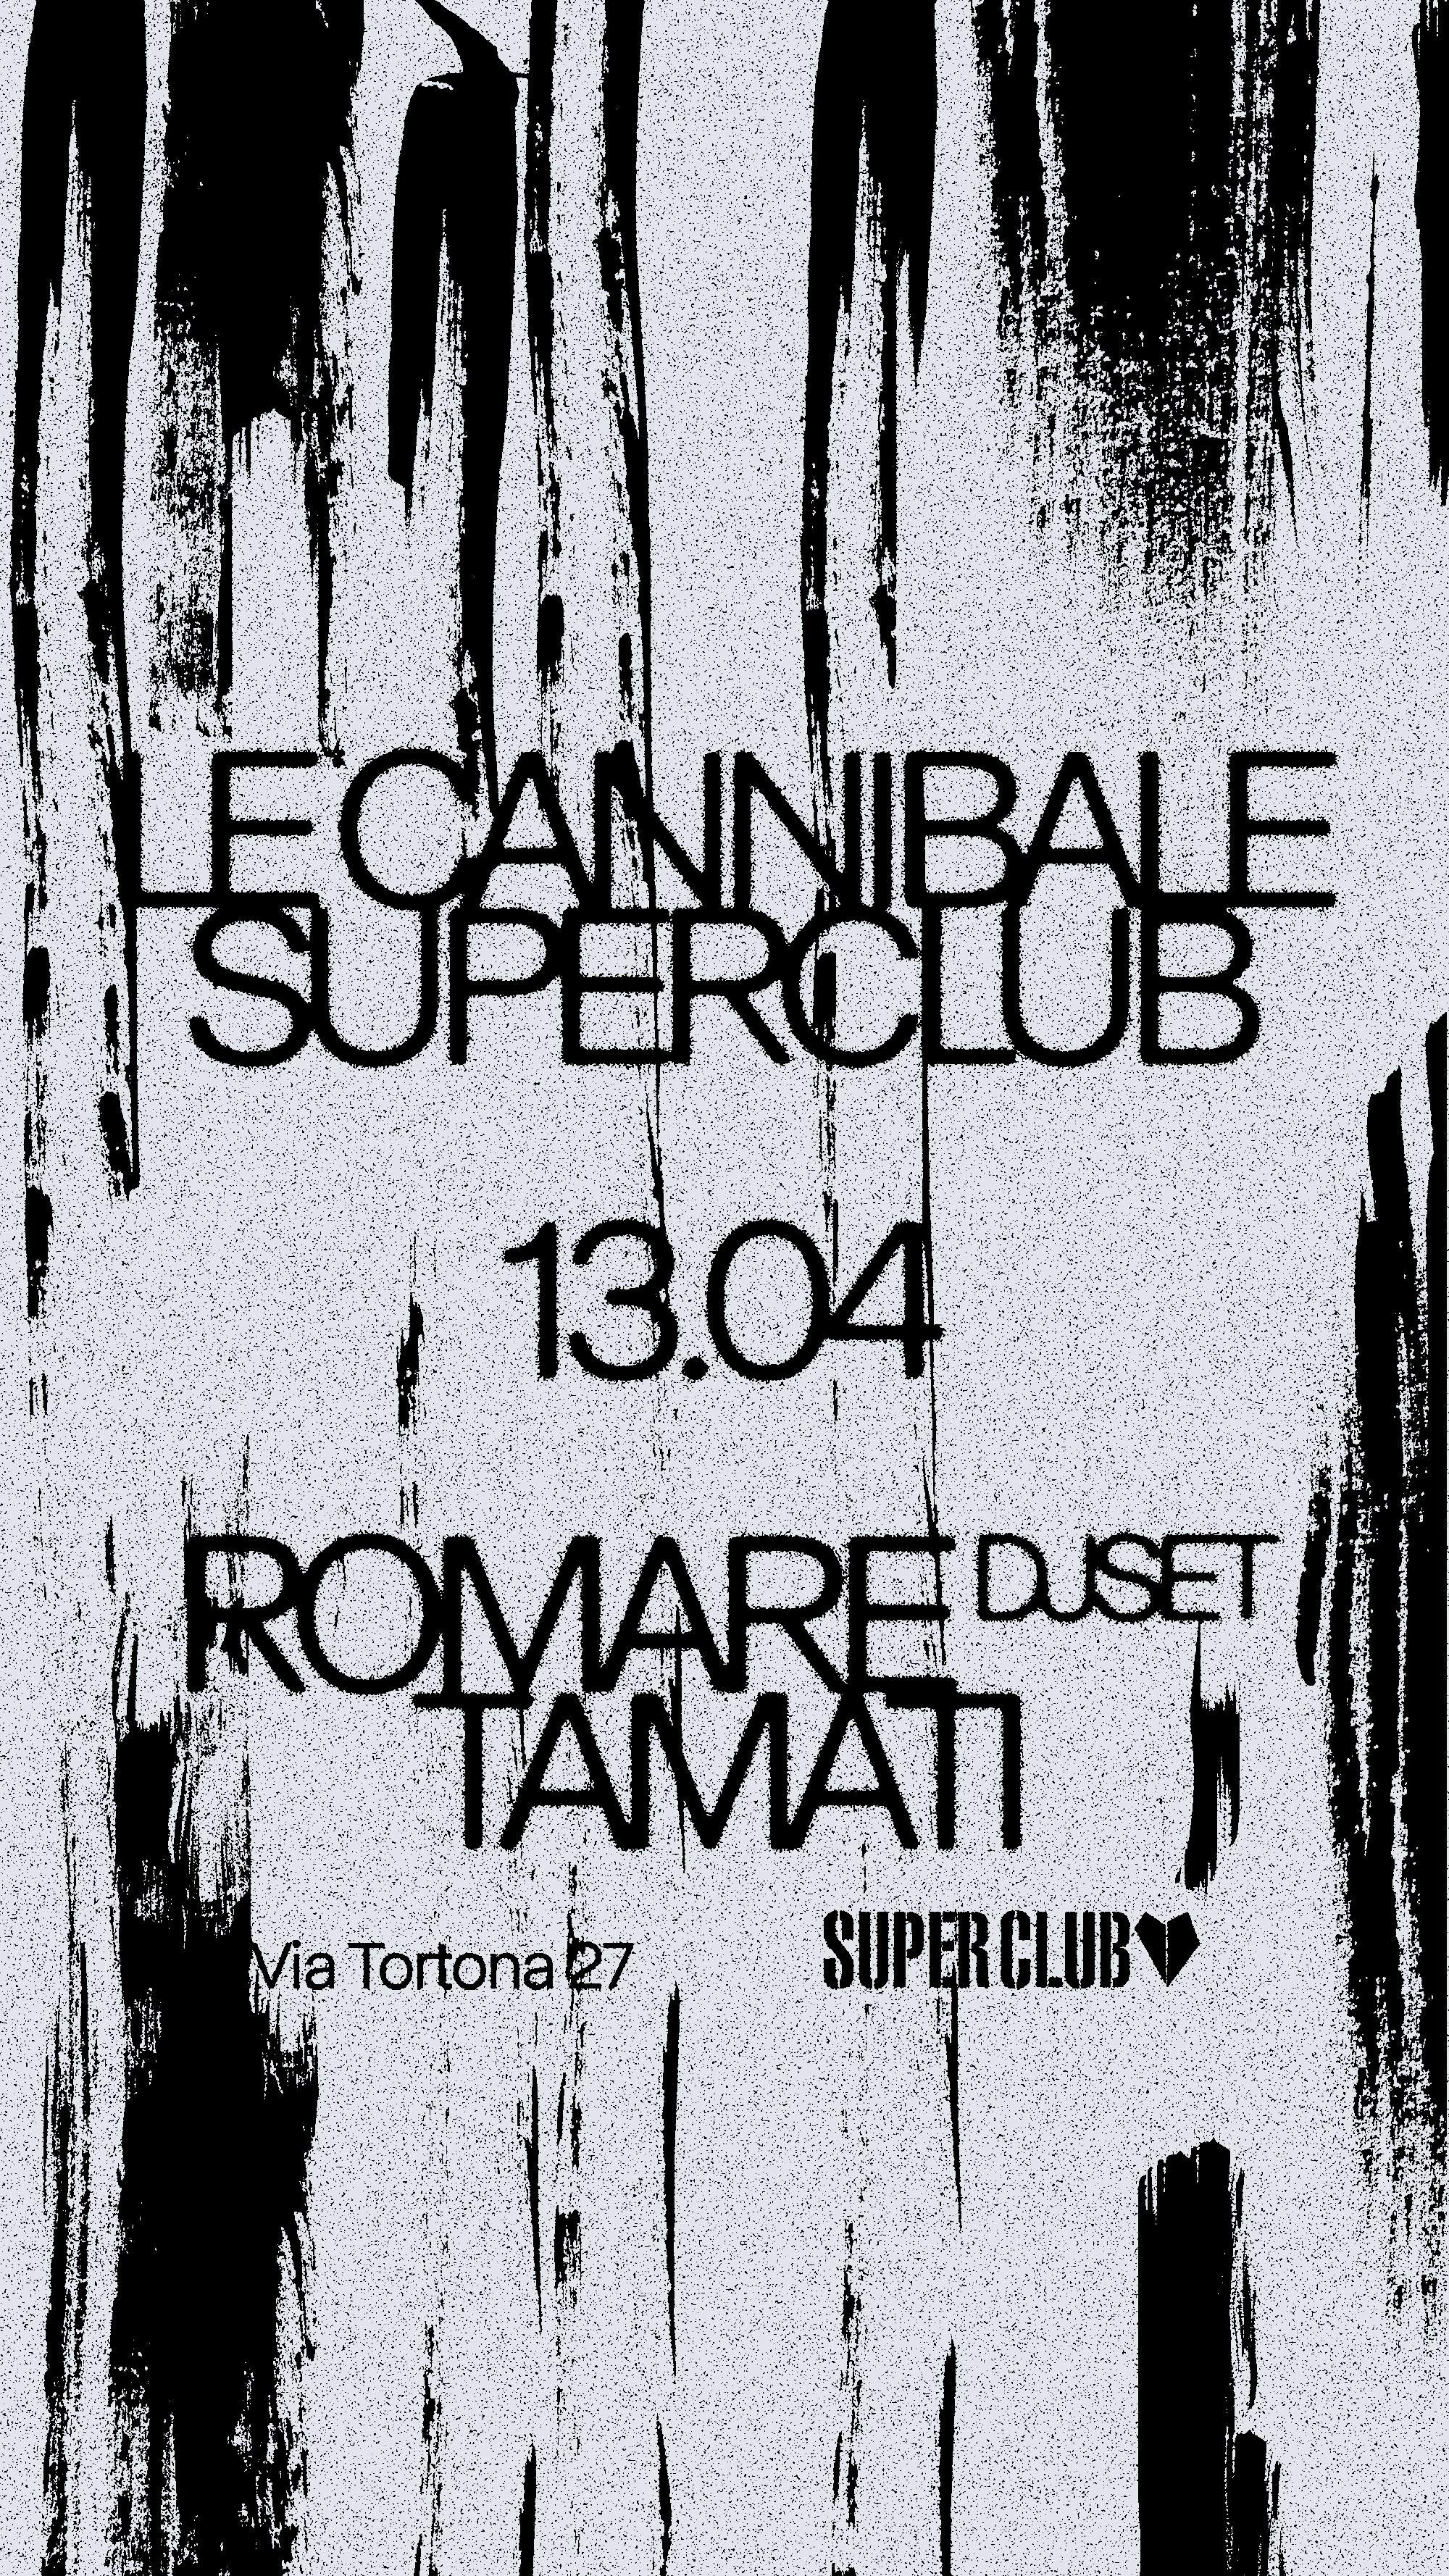 Le Cannibale Superclub - Romare, Tamati - フライヤー裏